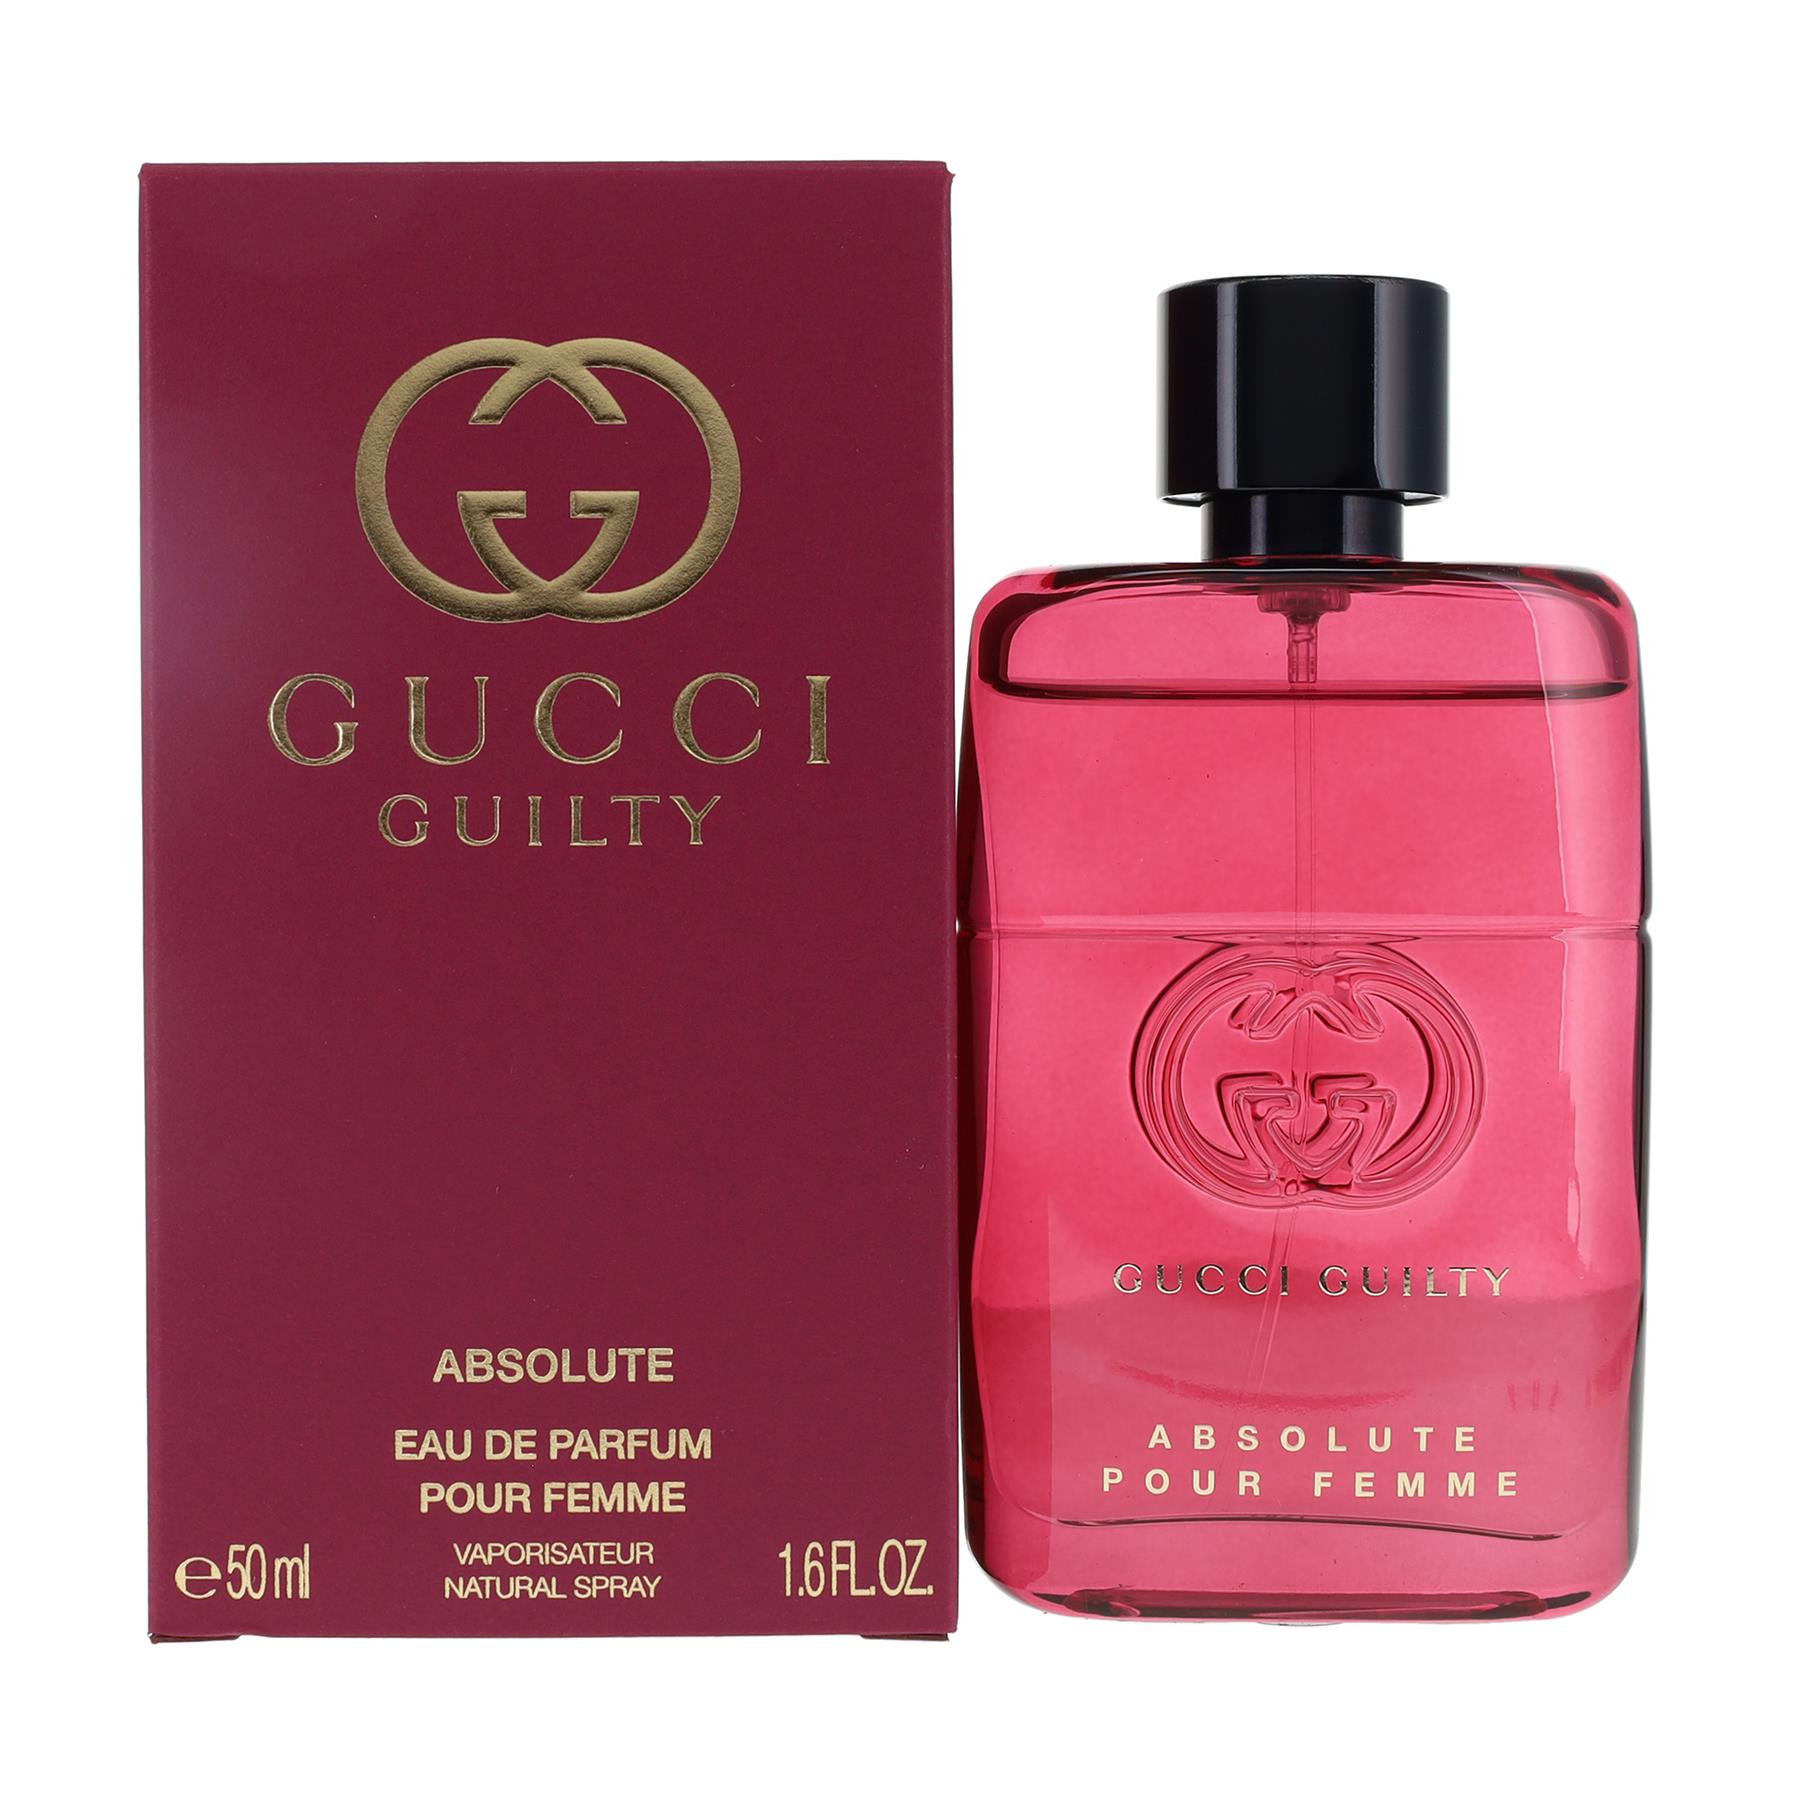 Gucci Guilty Absolute Pour Femme 50ml Eau de Parfum Spray for Her from Perfume Plus Direct